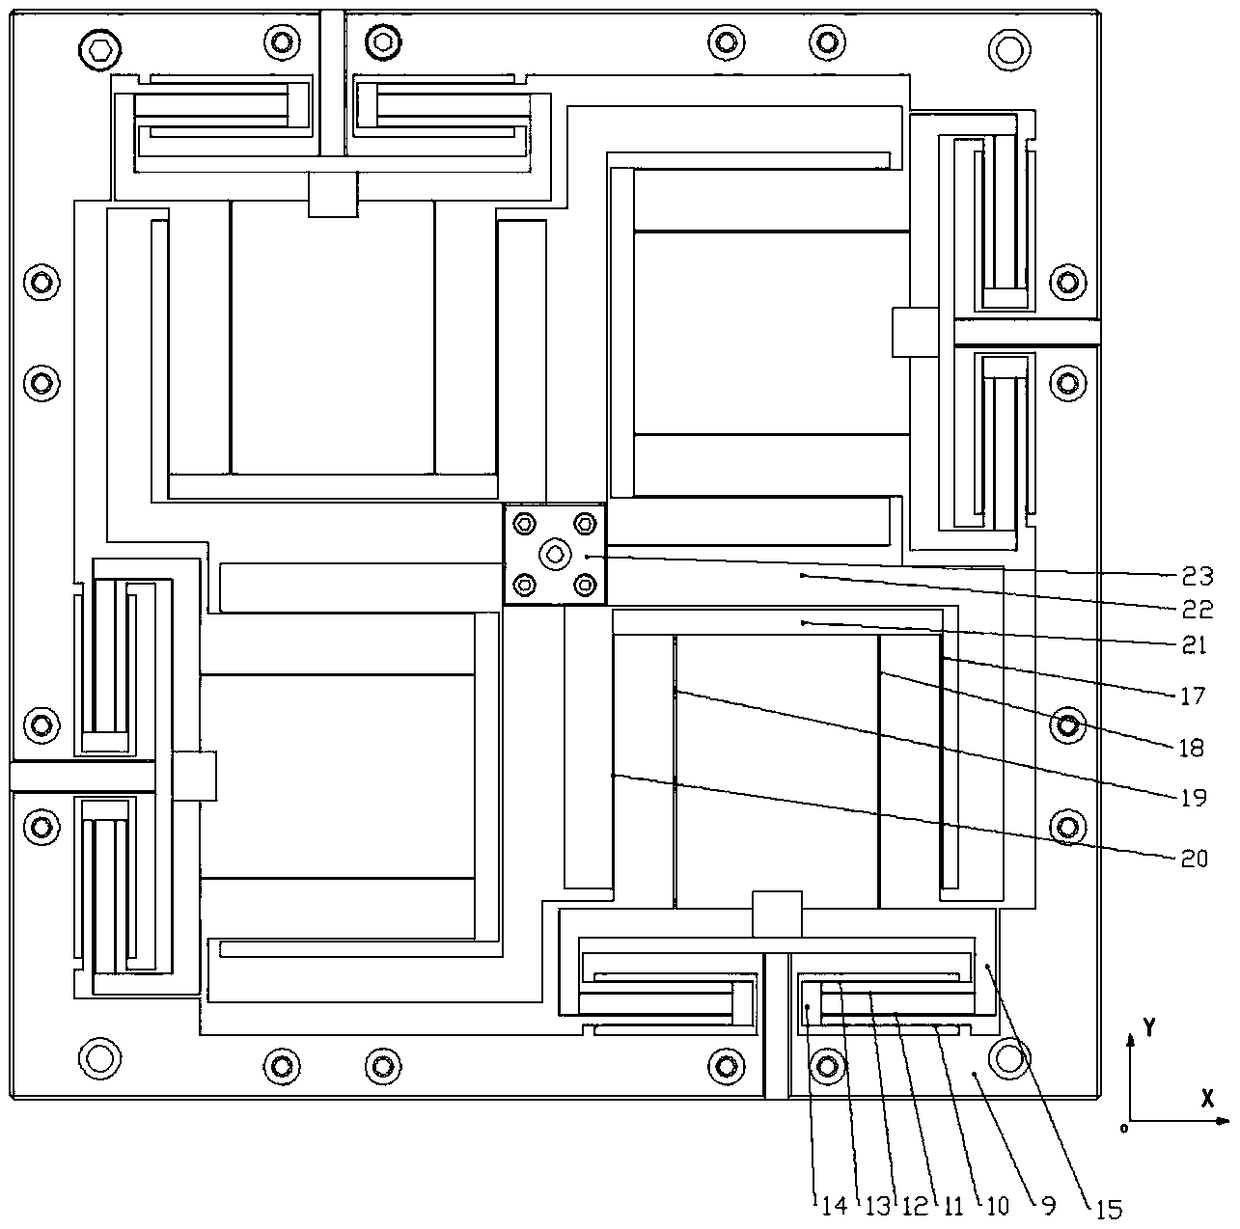 X-Y-theta micro-positioning platform design based on laser ruler movable shaft detection method